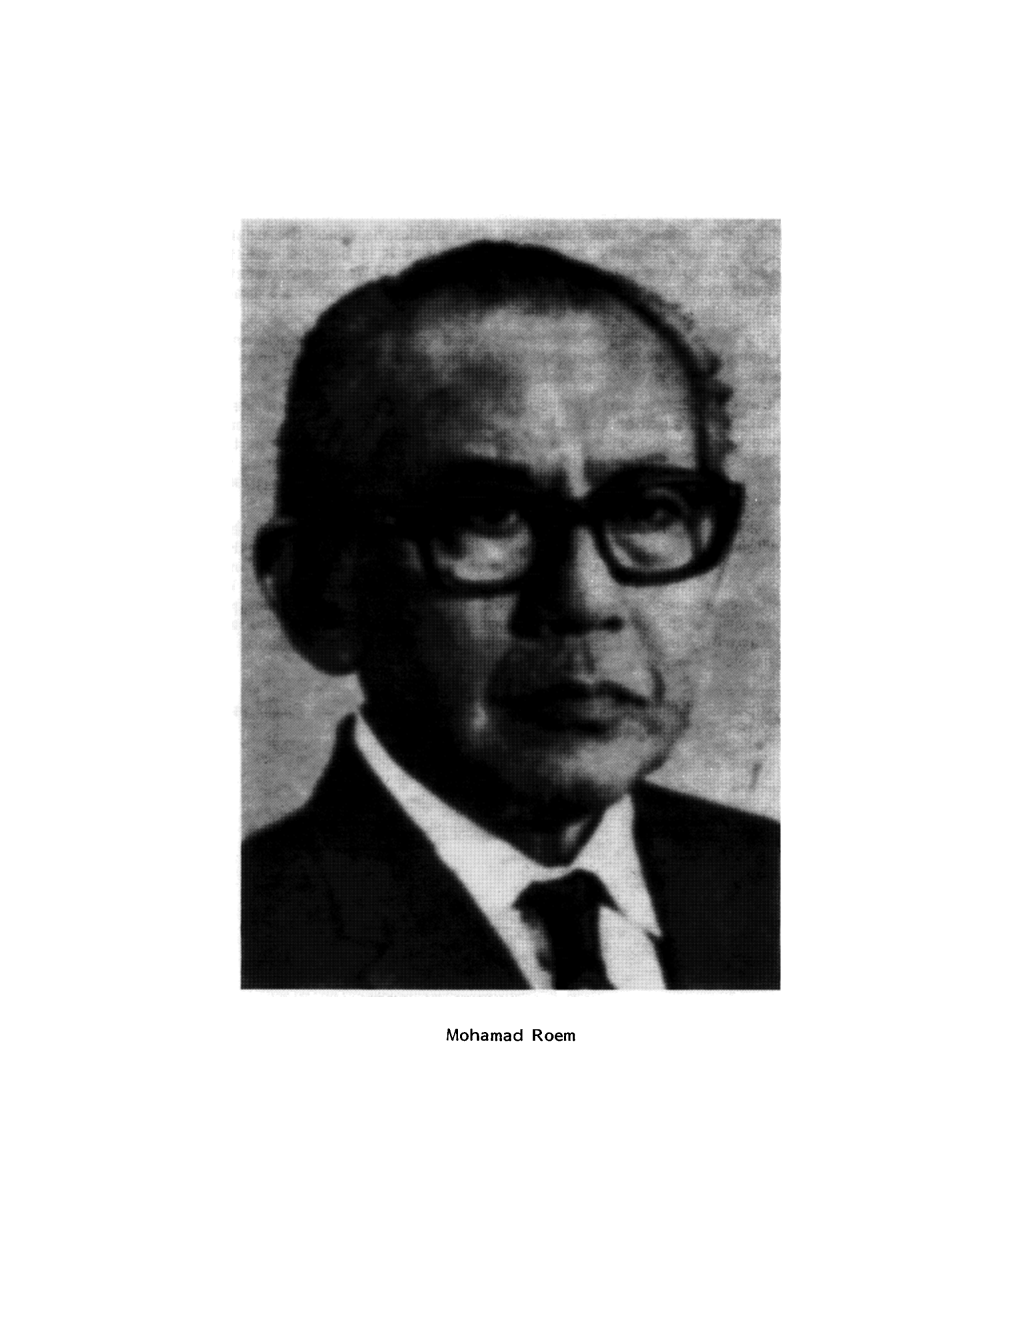 Mohamad Roem in MEMORIAM: MOHAMAD ROEM (1908-1983)